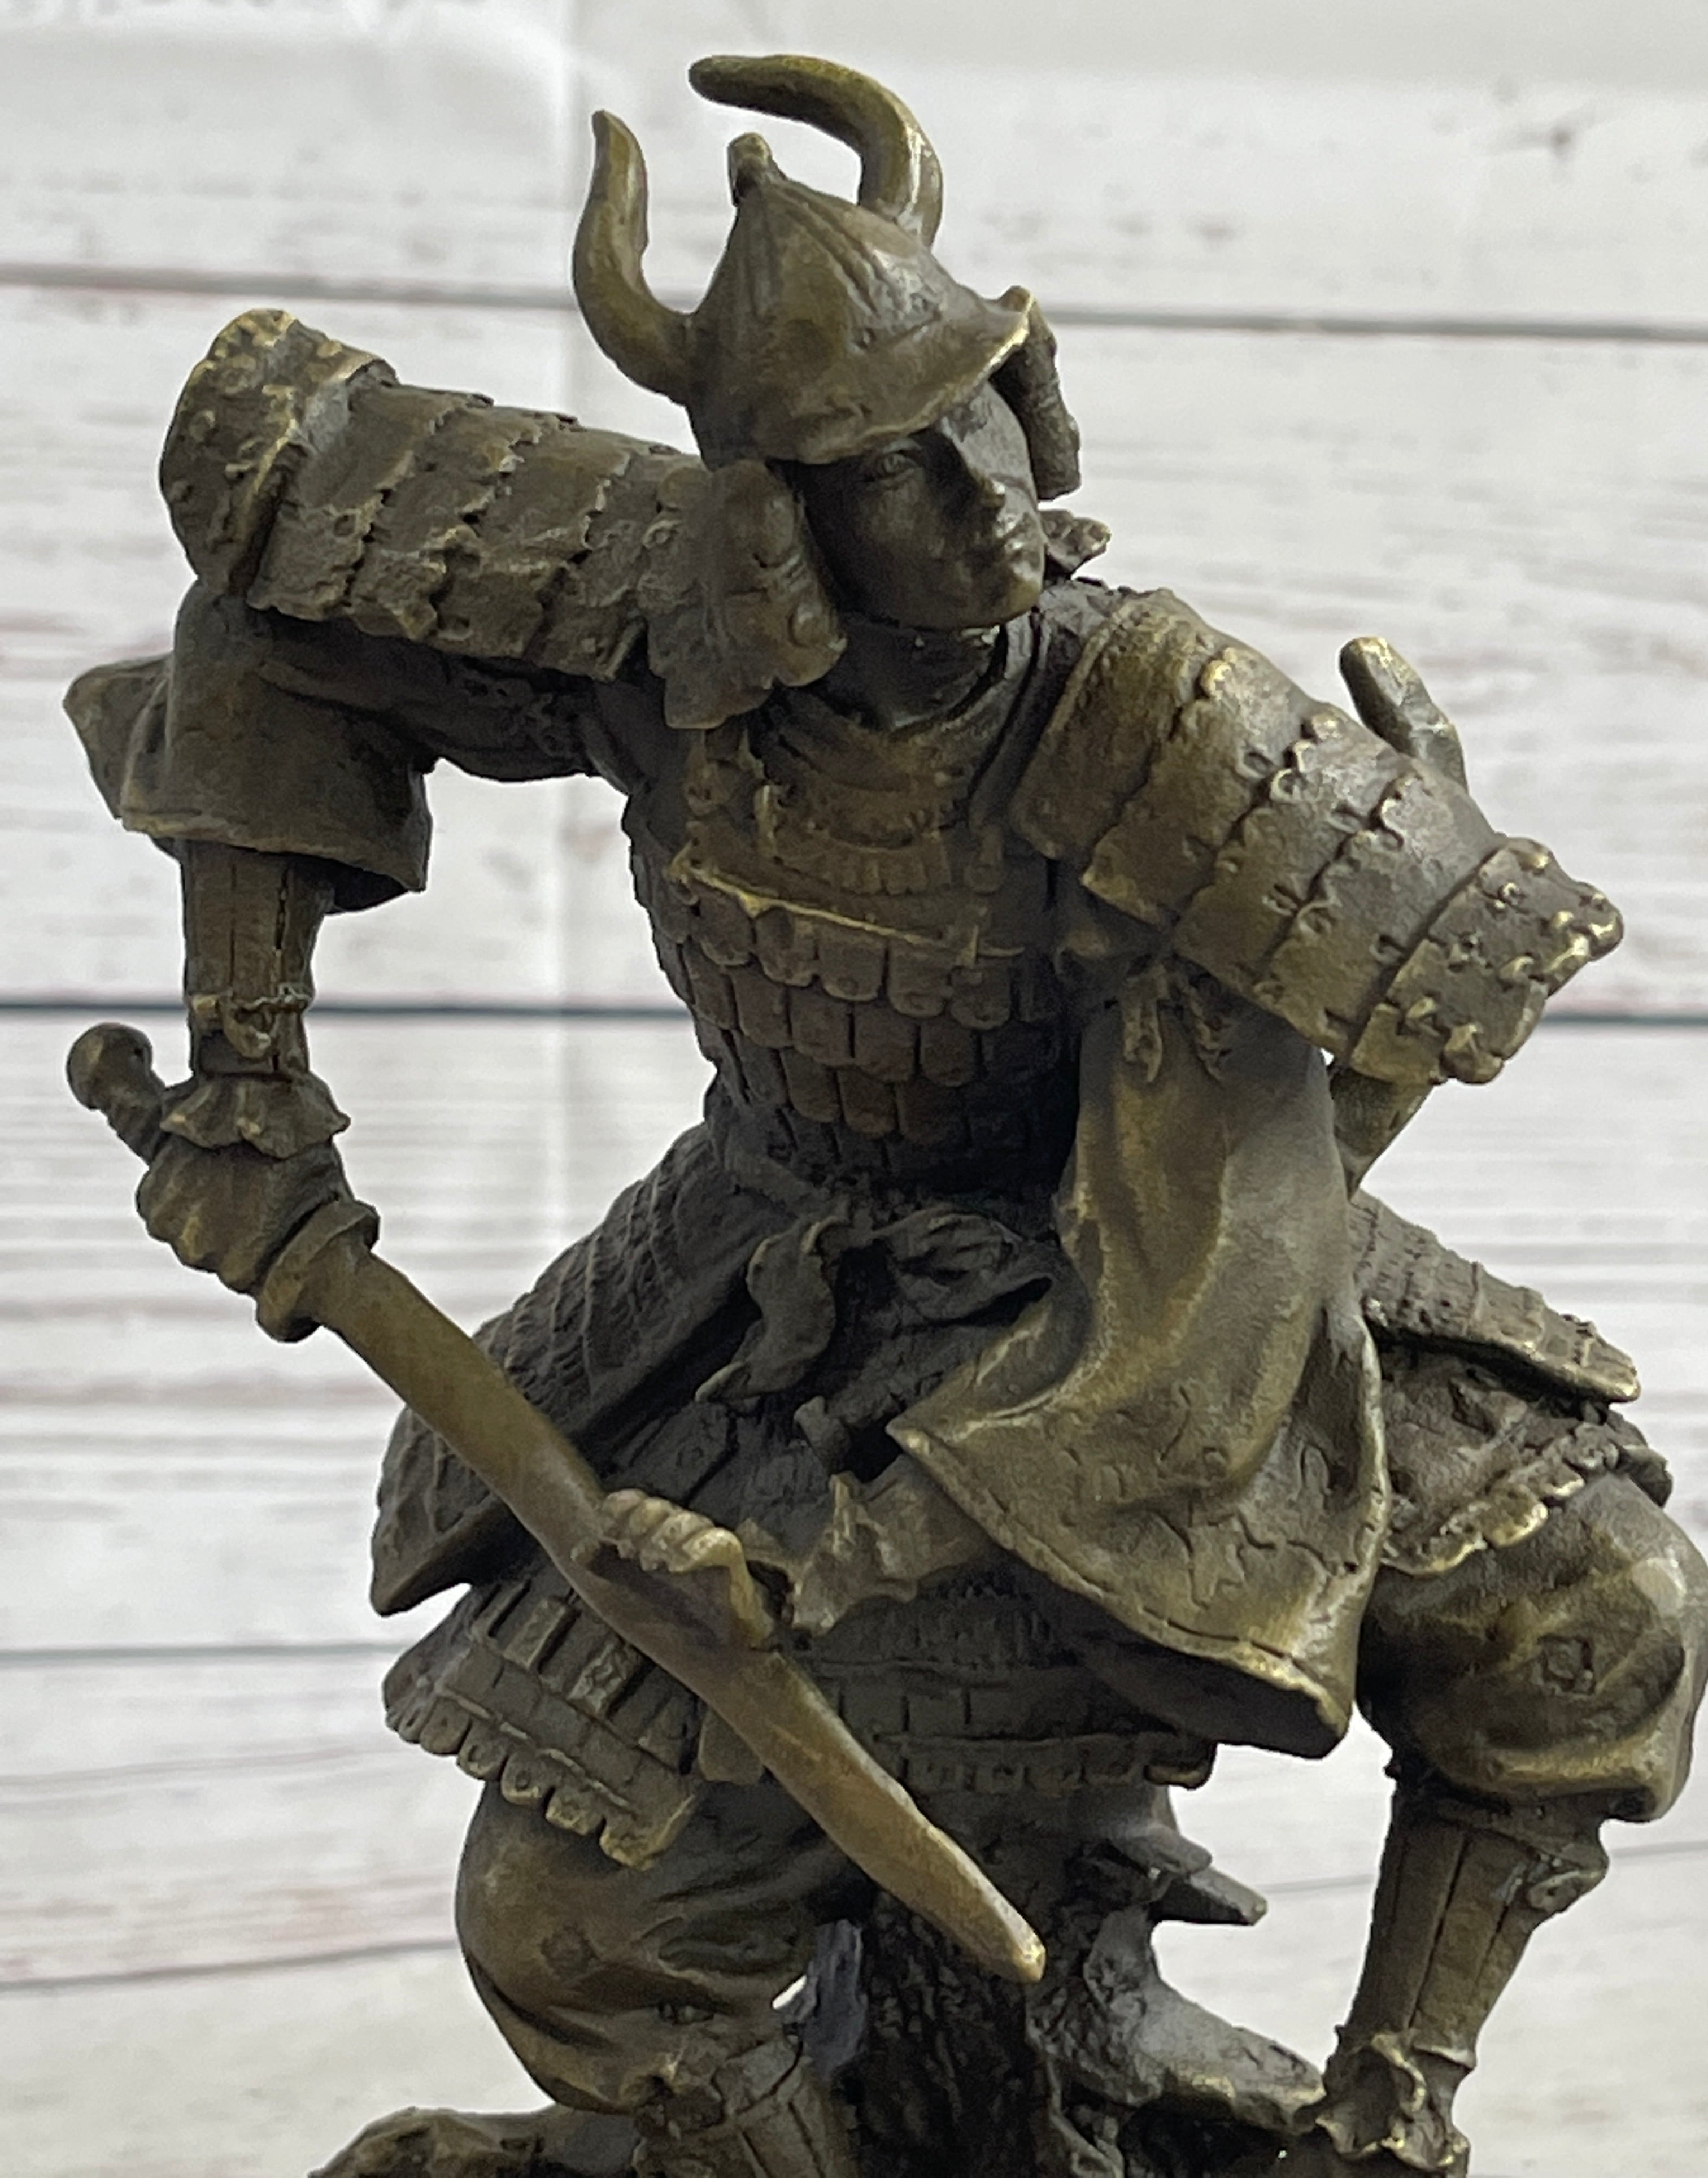 Samurai  Samurai armor, Japanese warrior, Samurai warrior